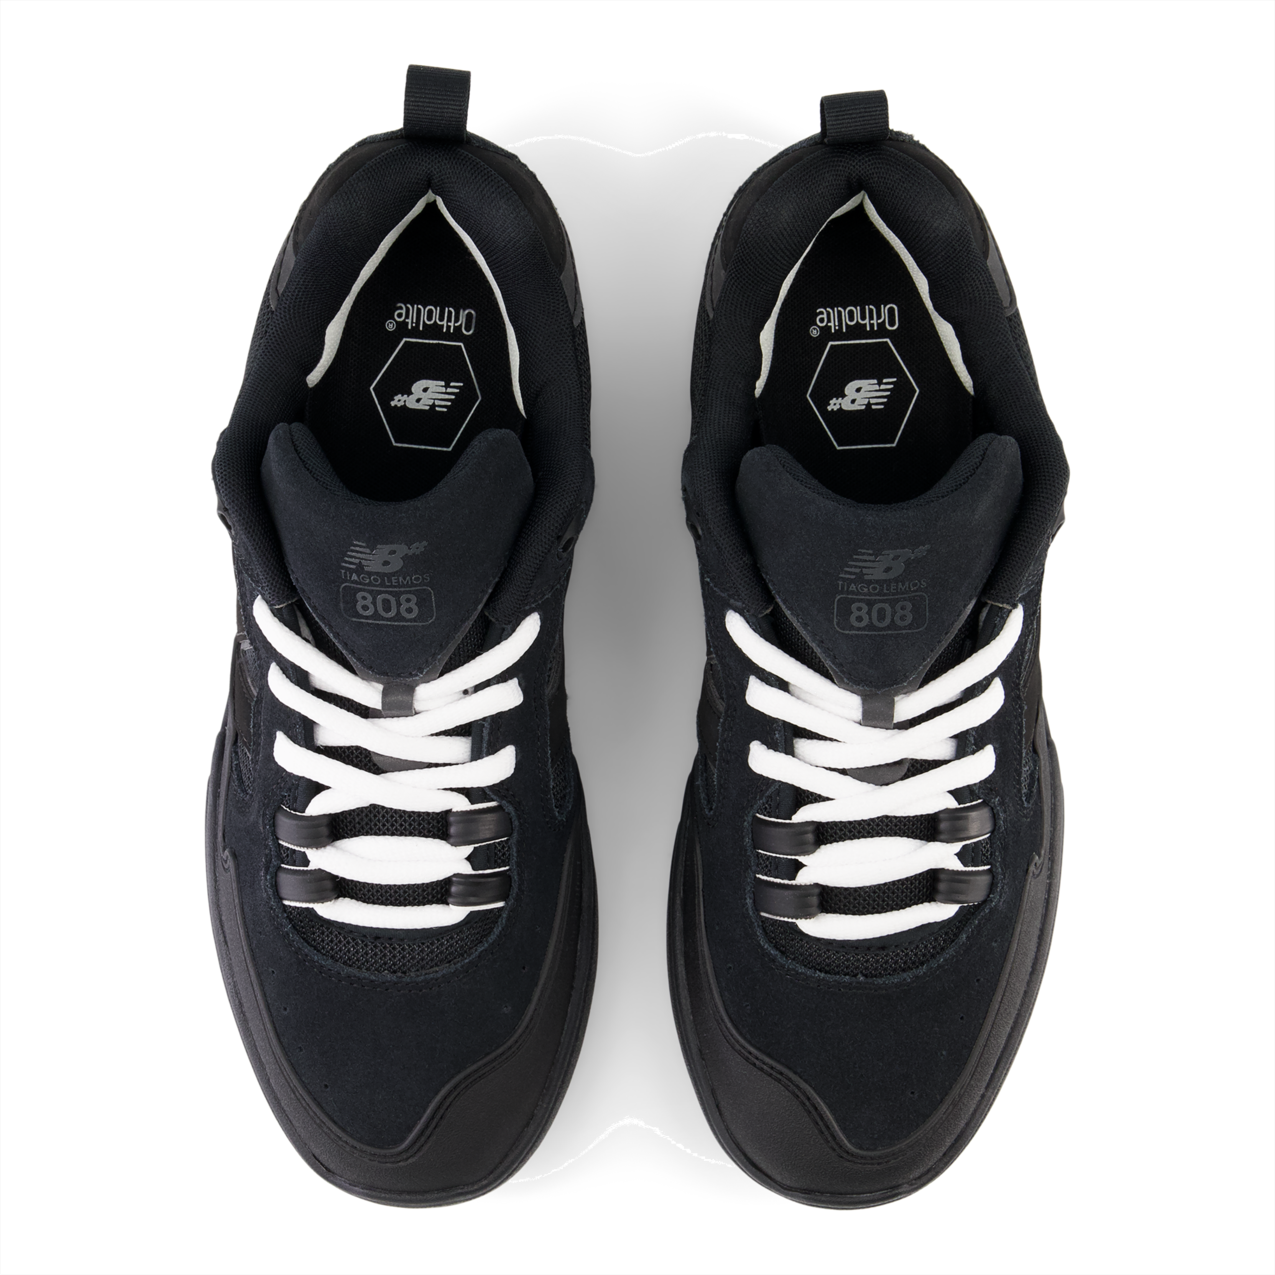 New Balance Numeric Men's Tiago Lemos 808 Black Black Shoes